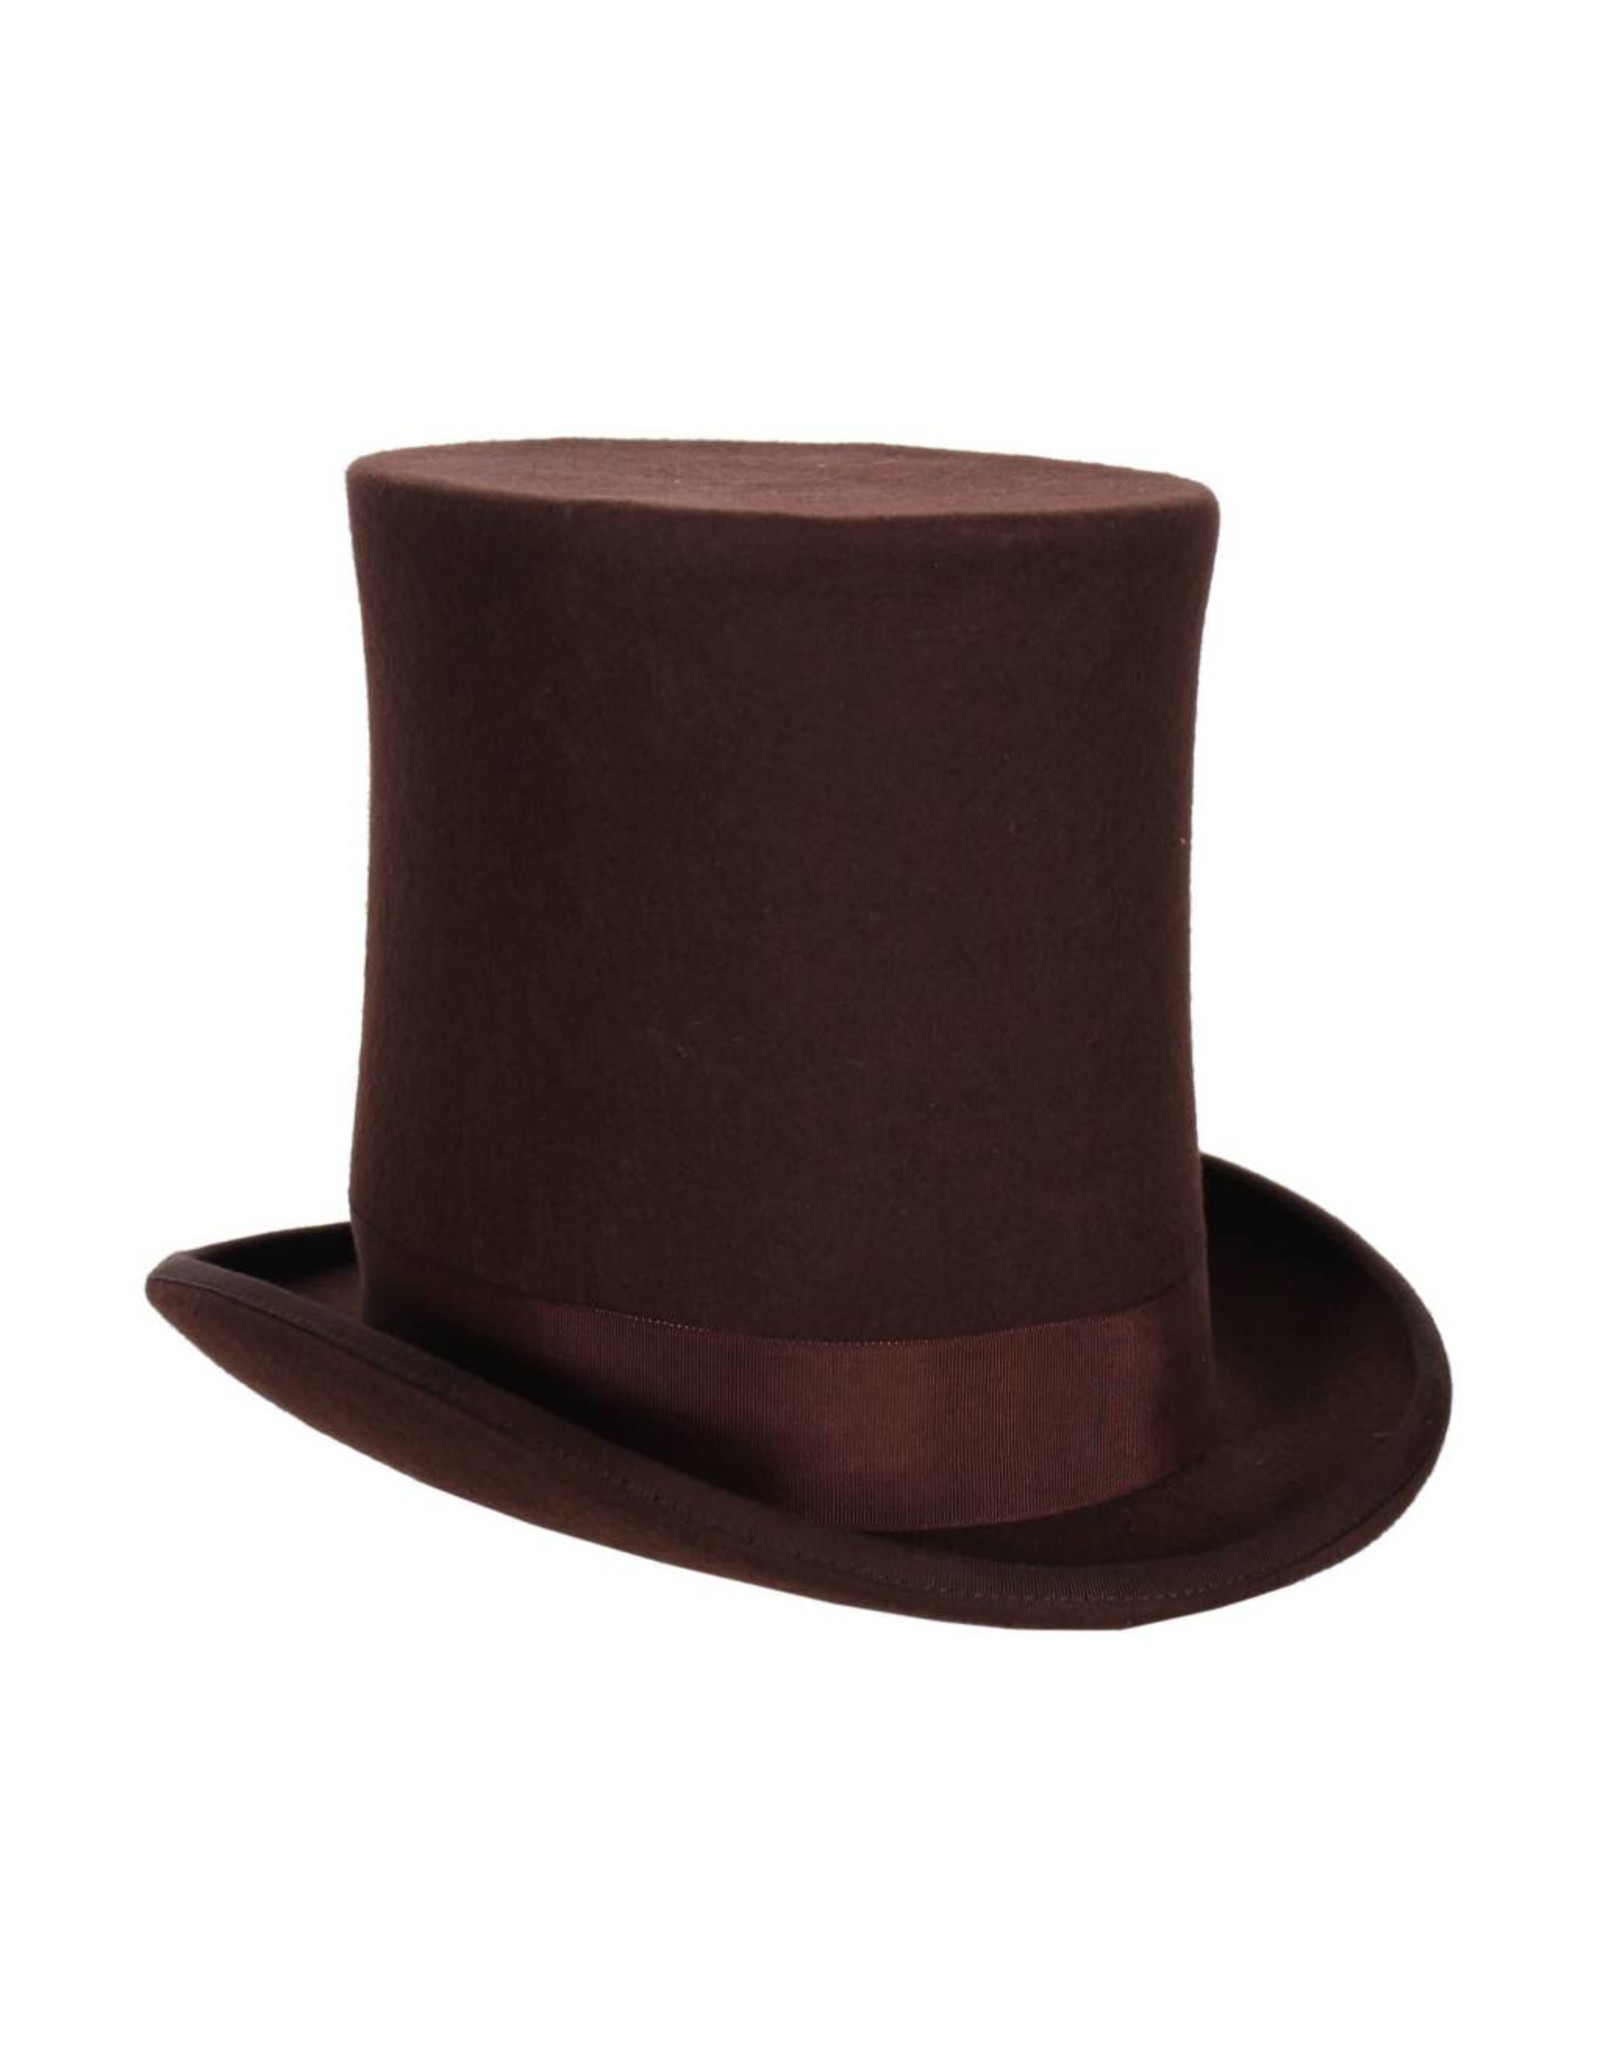 Hoge hoed extra hoog 21cm, Bruin